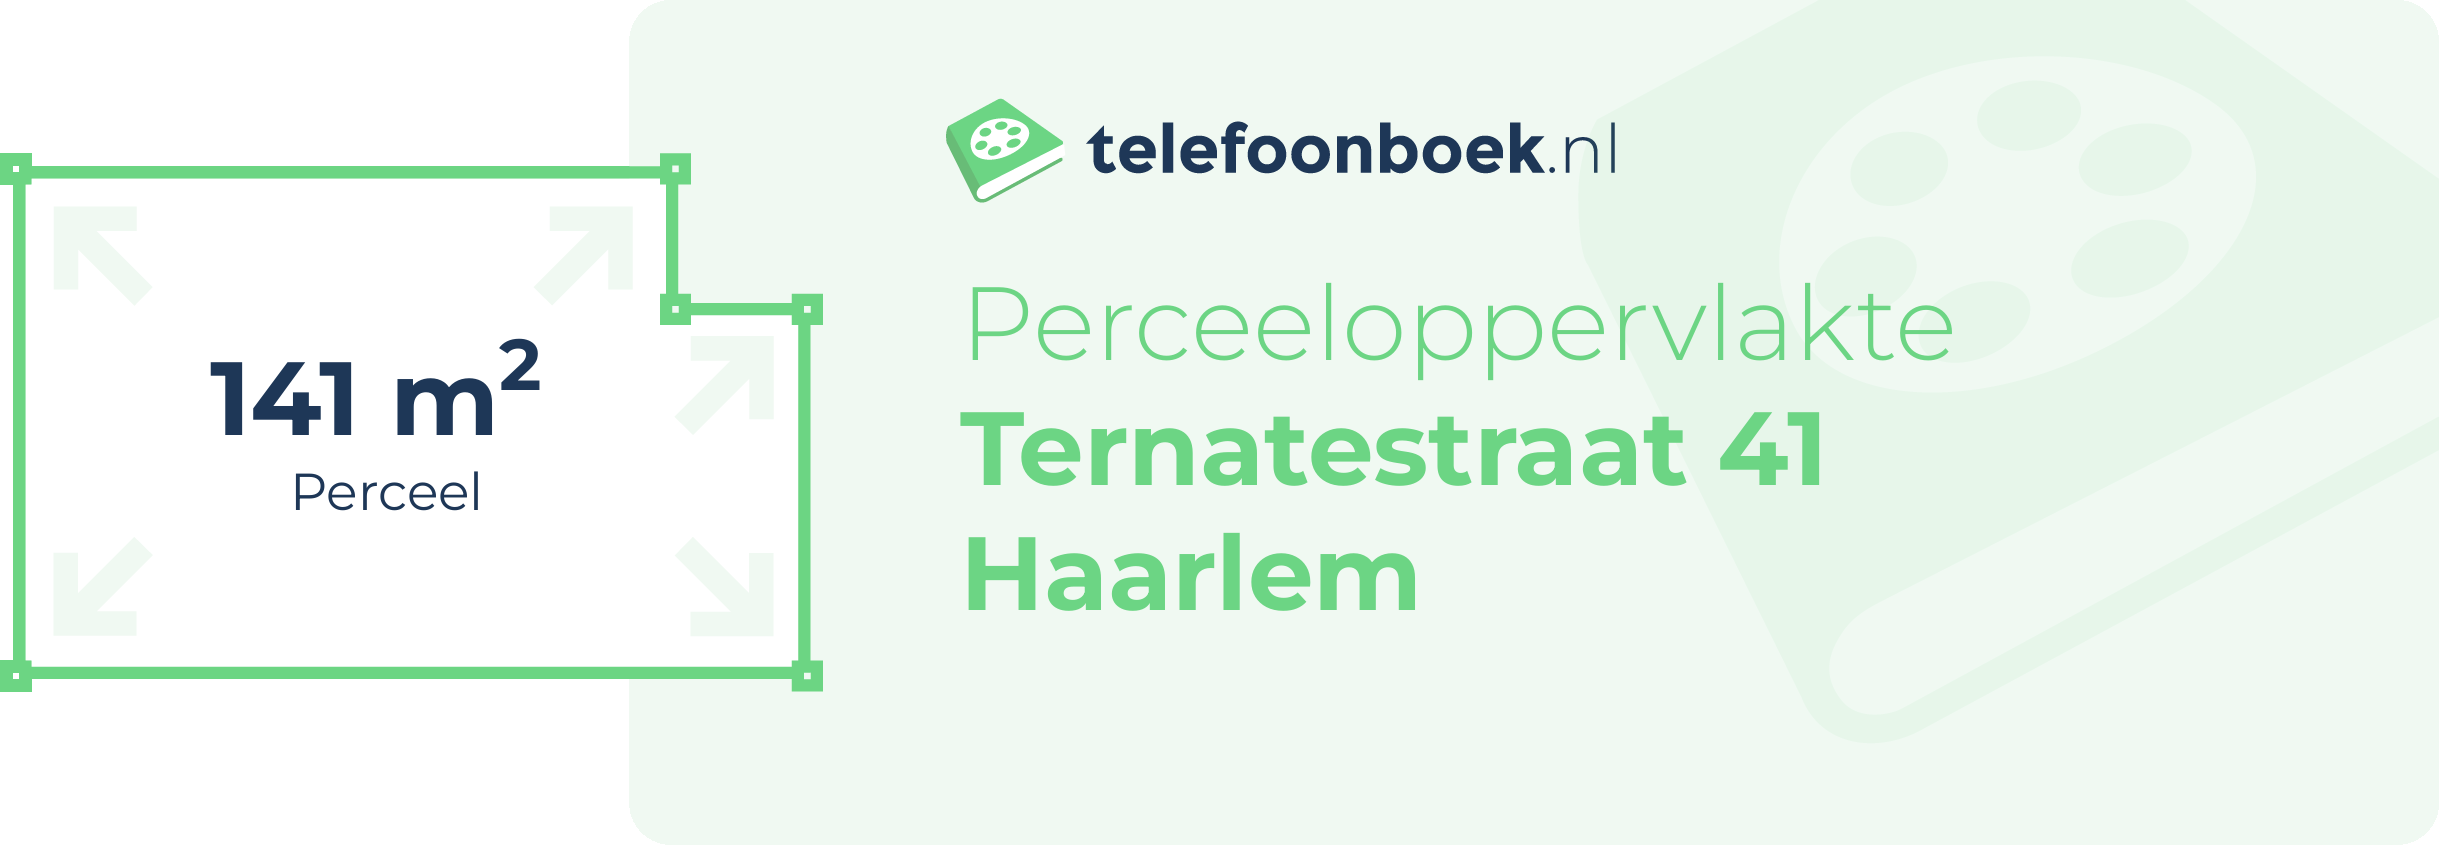 Perceeloppervlakte Ternatestraat 41 Haarlem